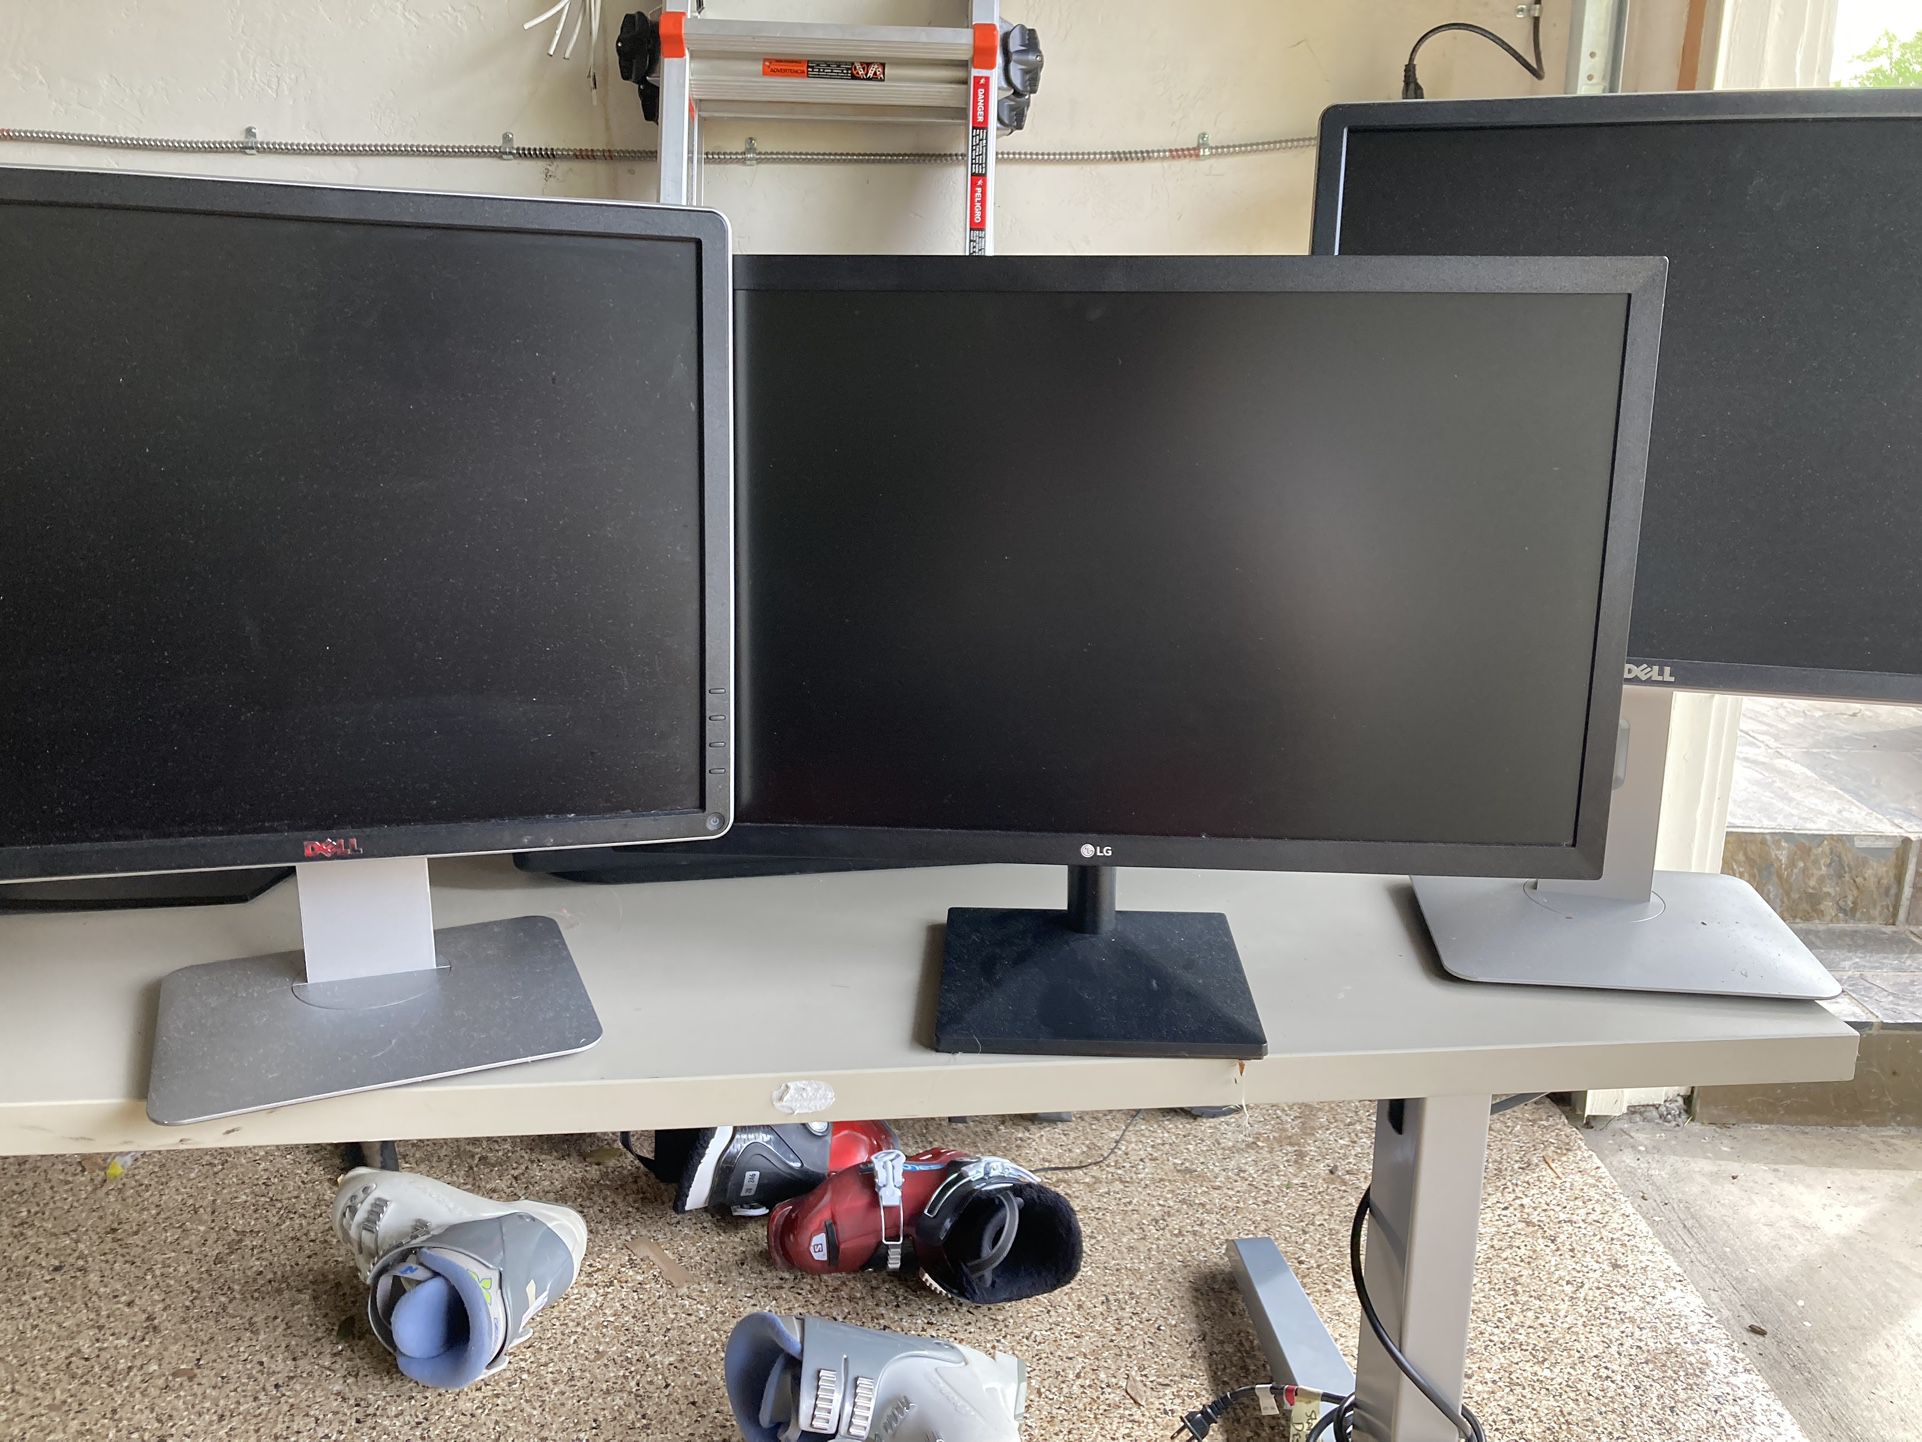 2 dell and 1 lg monitor